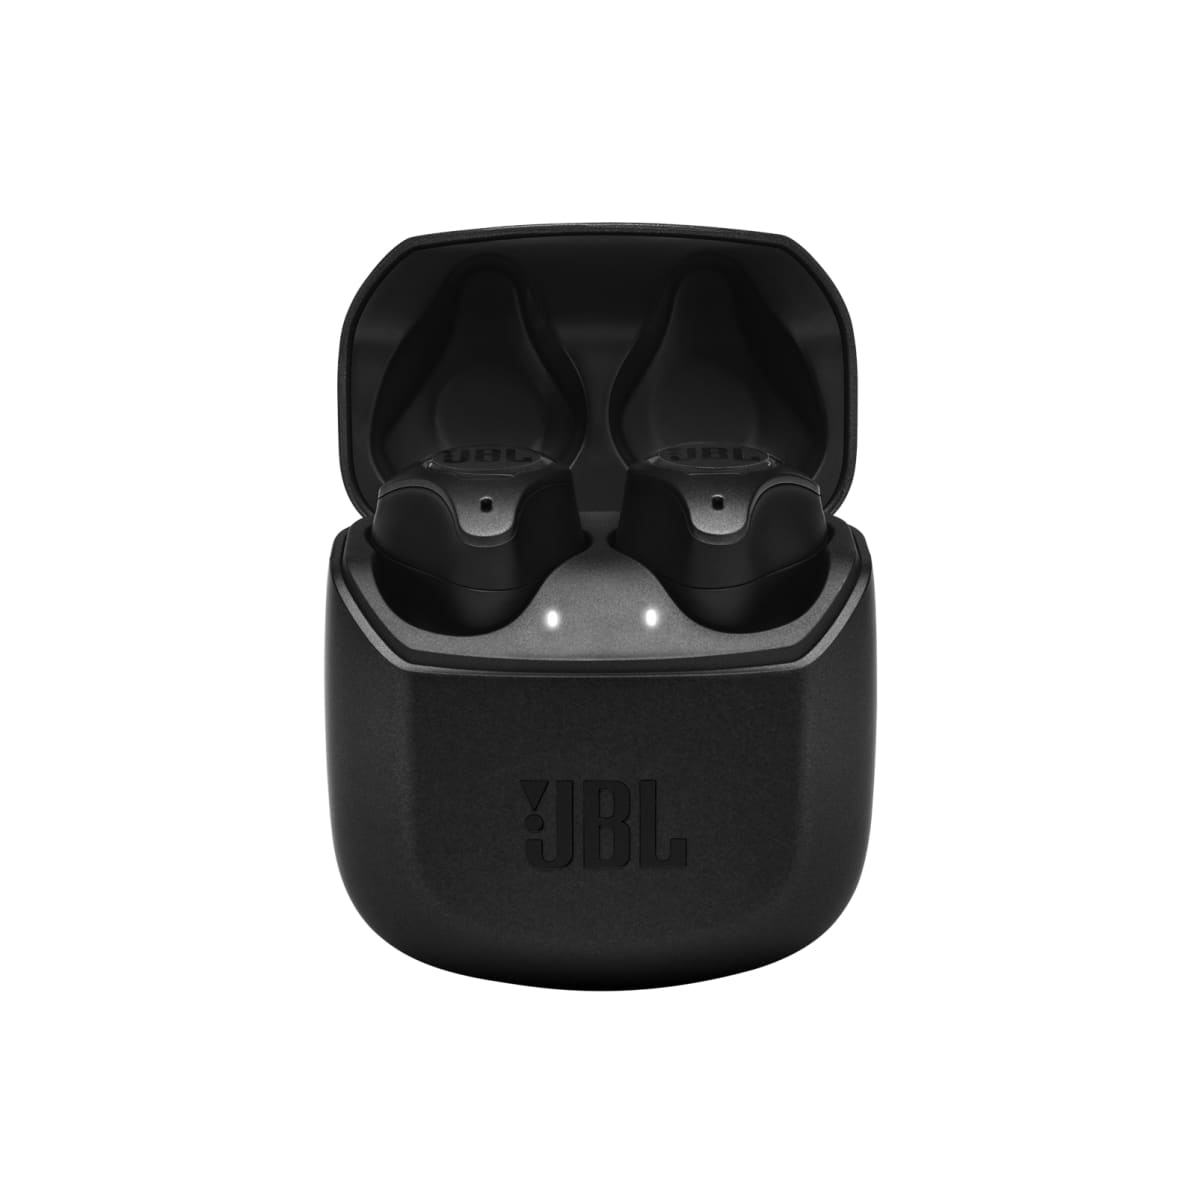 JBL CLUB PRO+ TWS True Wireless In-Ear NC Headphones with 